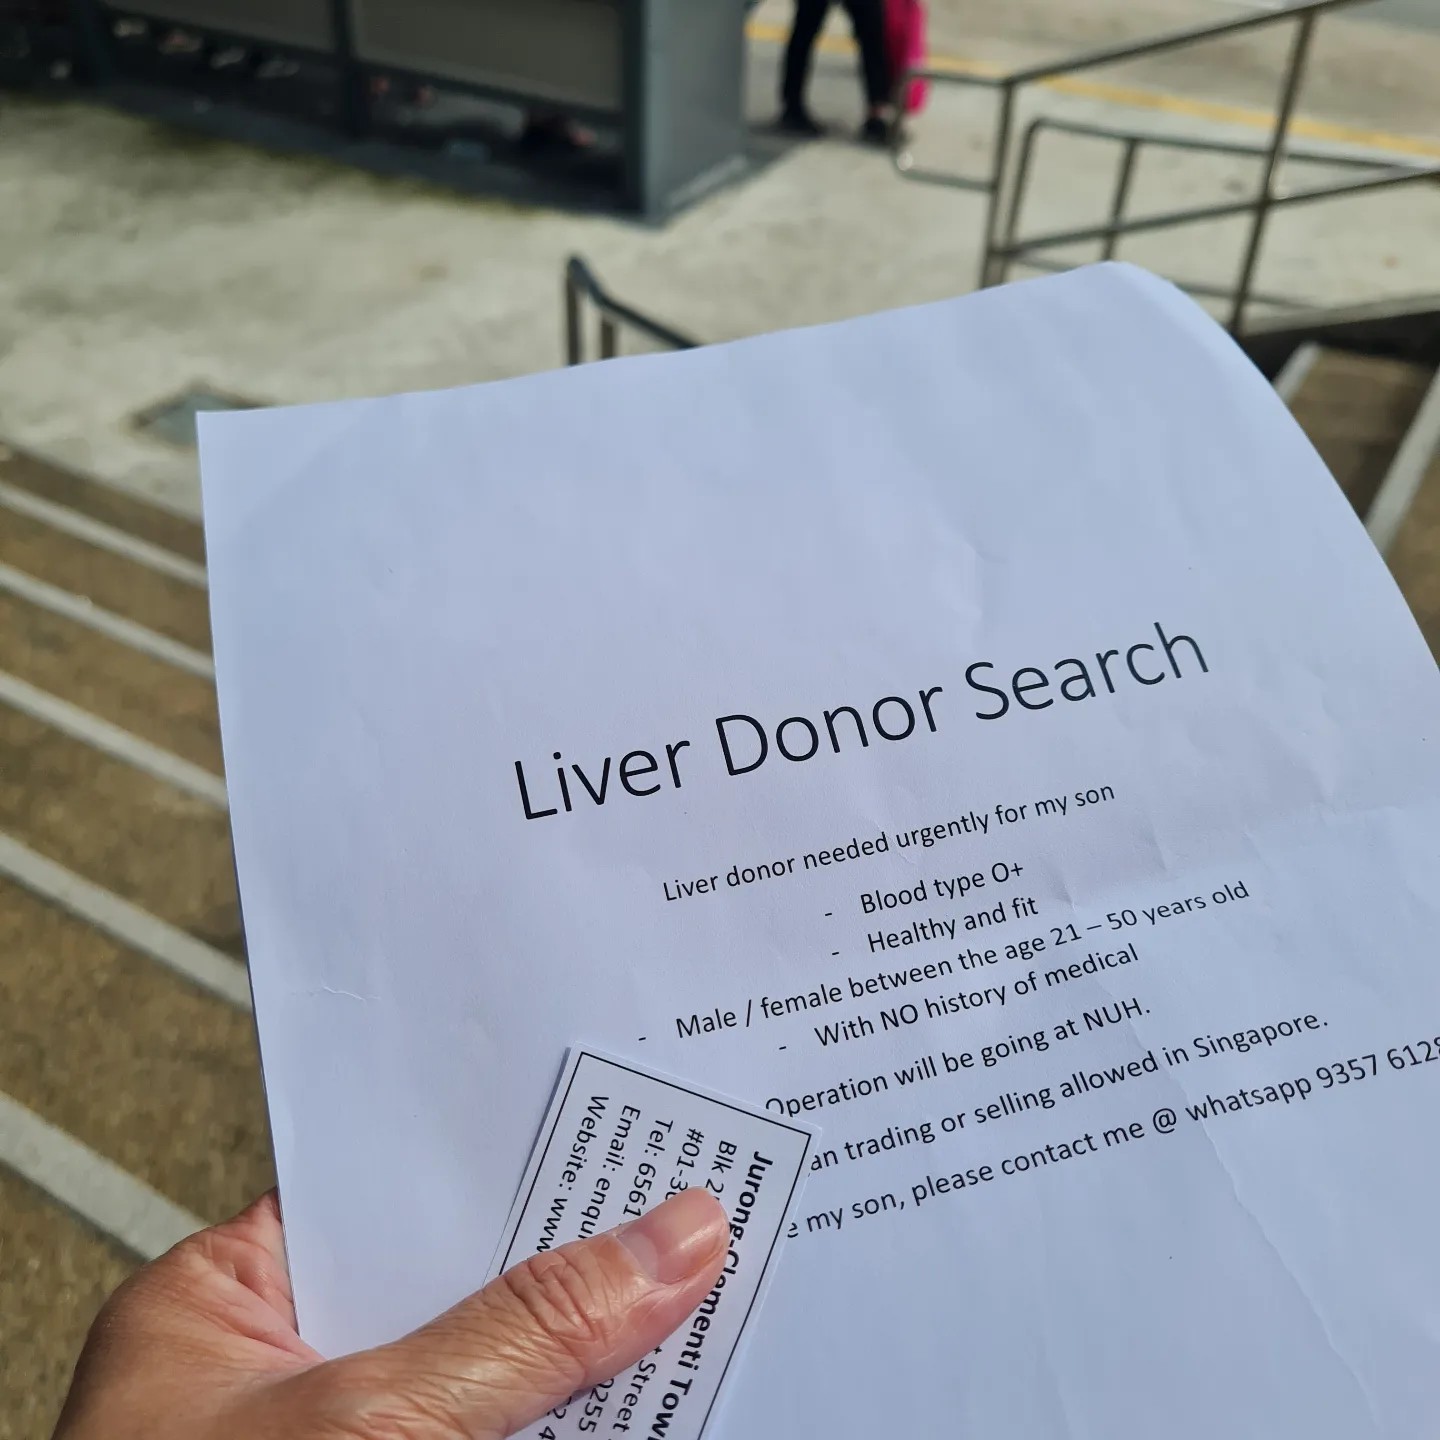 Liver donor search